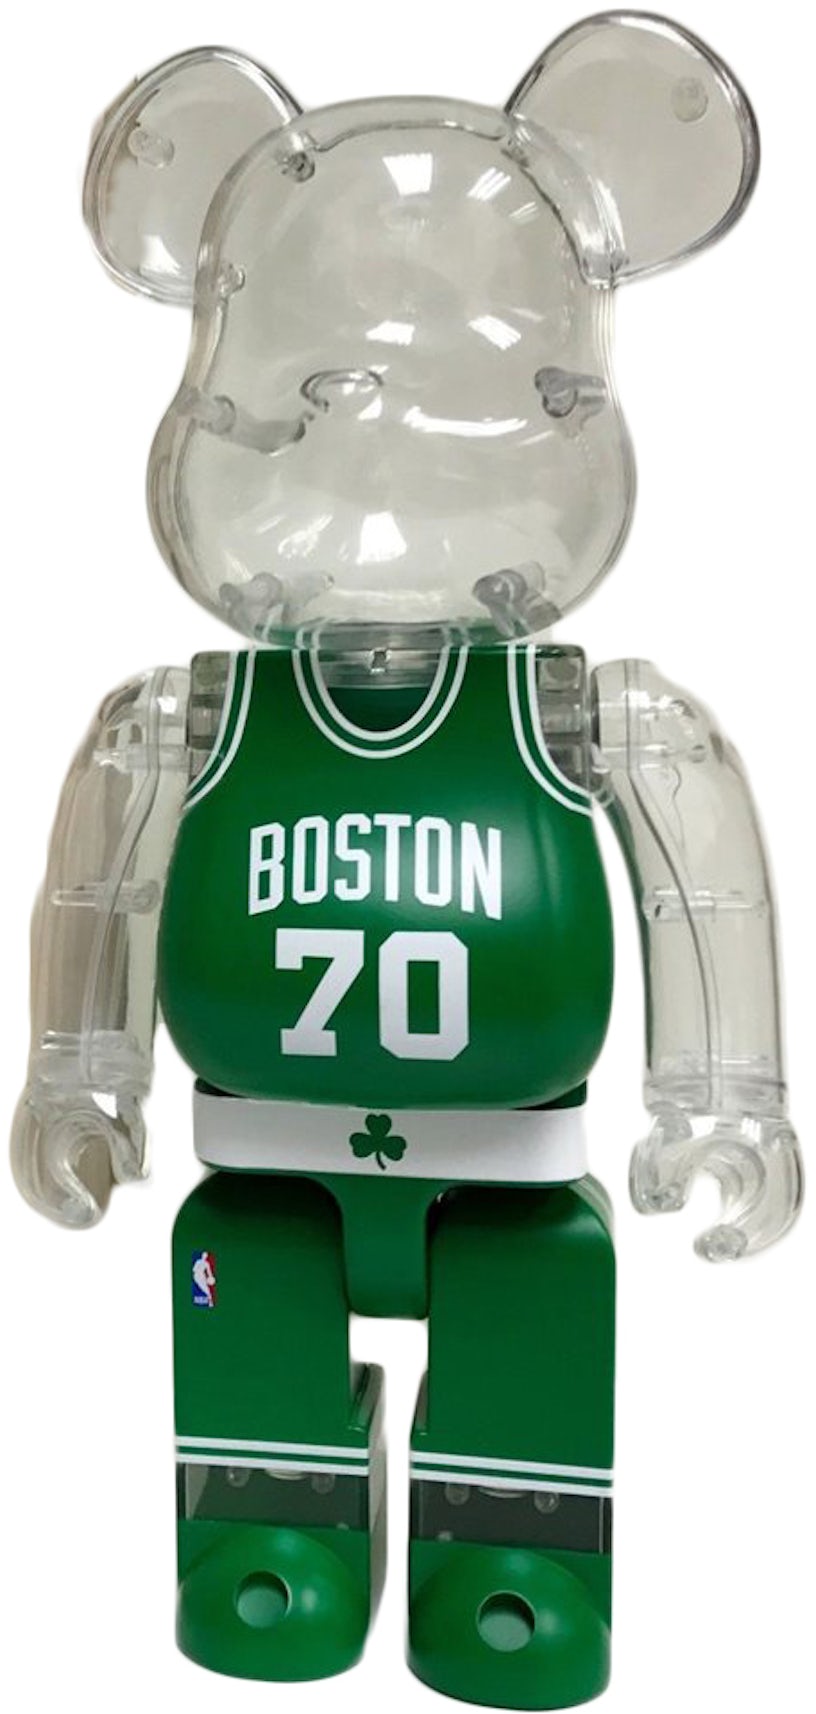 Bodega X Mitchell And Ness Respect Celtics Shirt Hoodie